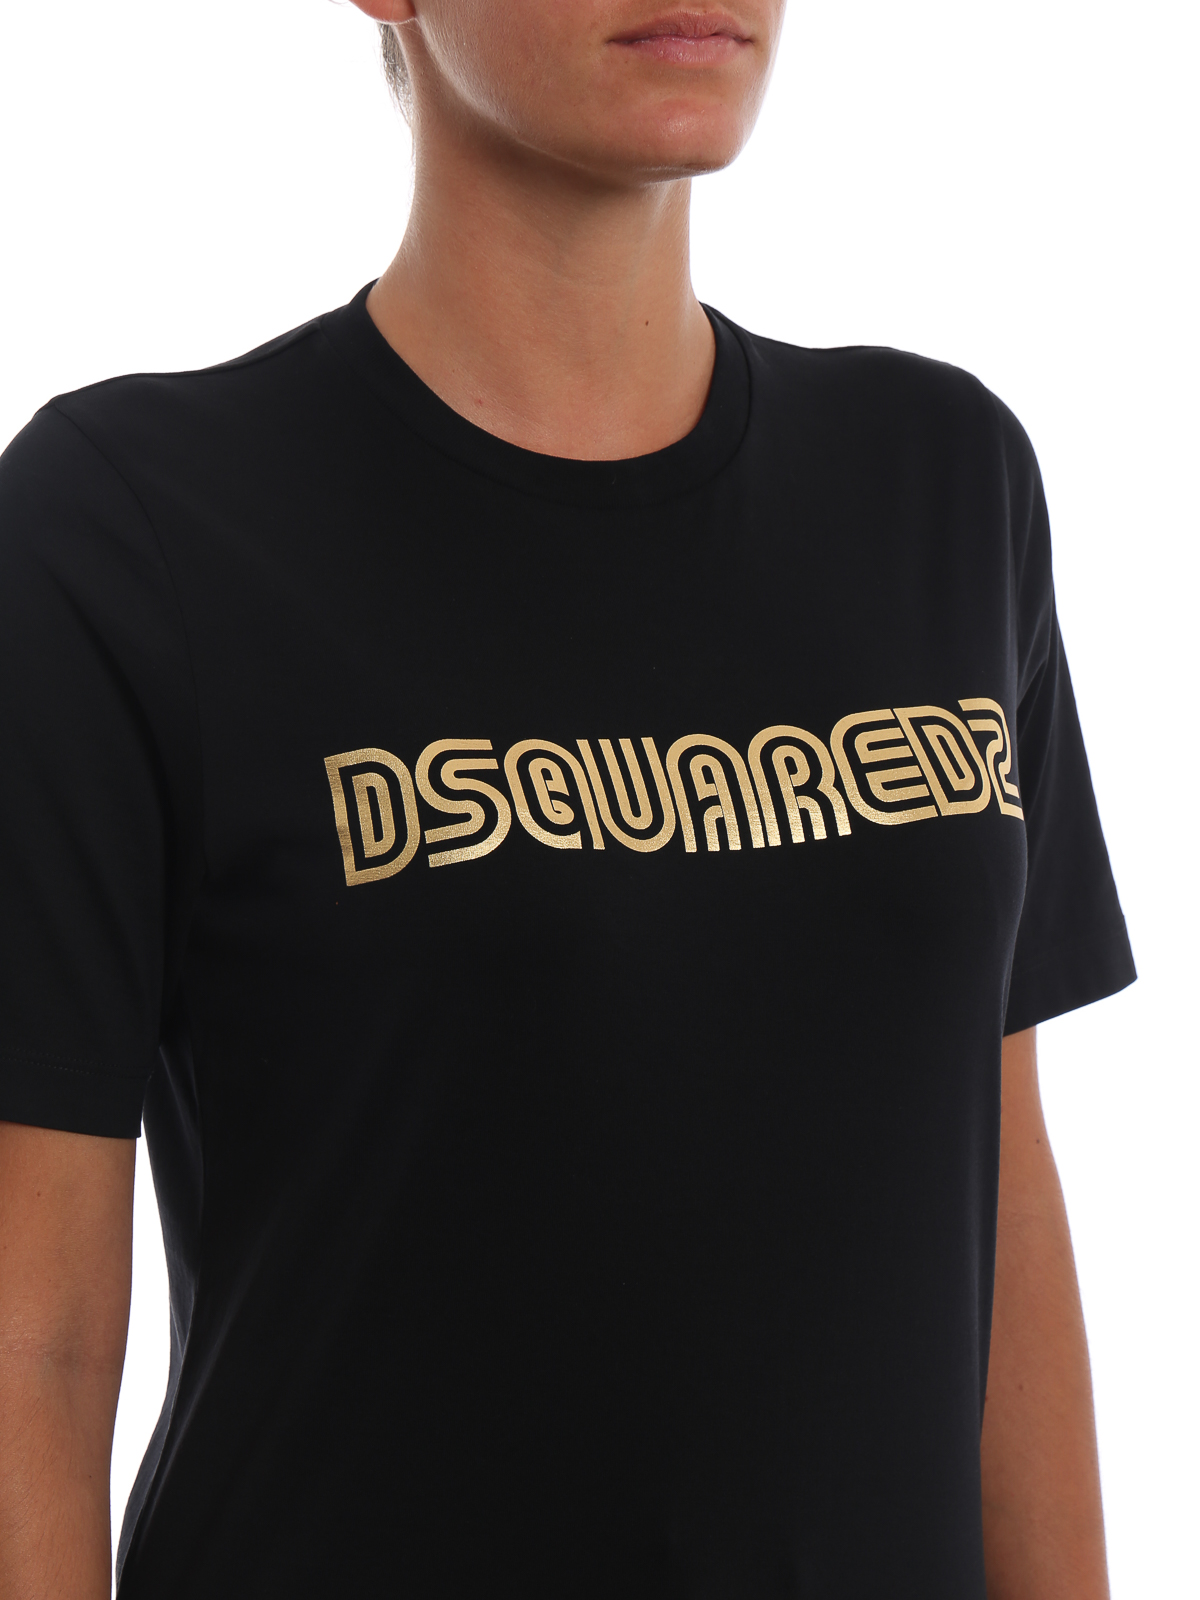 dsquared tshirt online